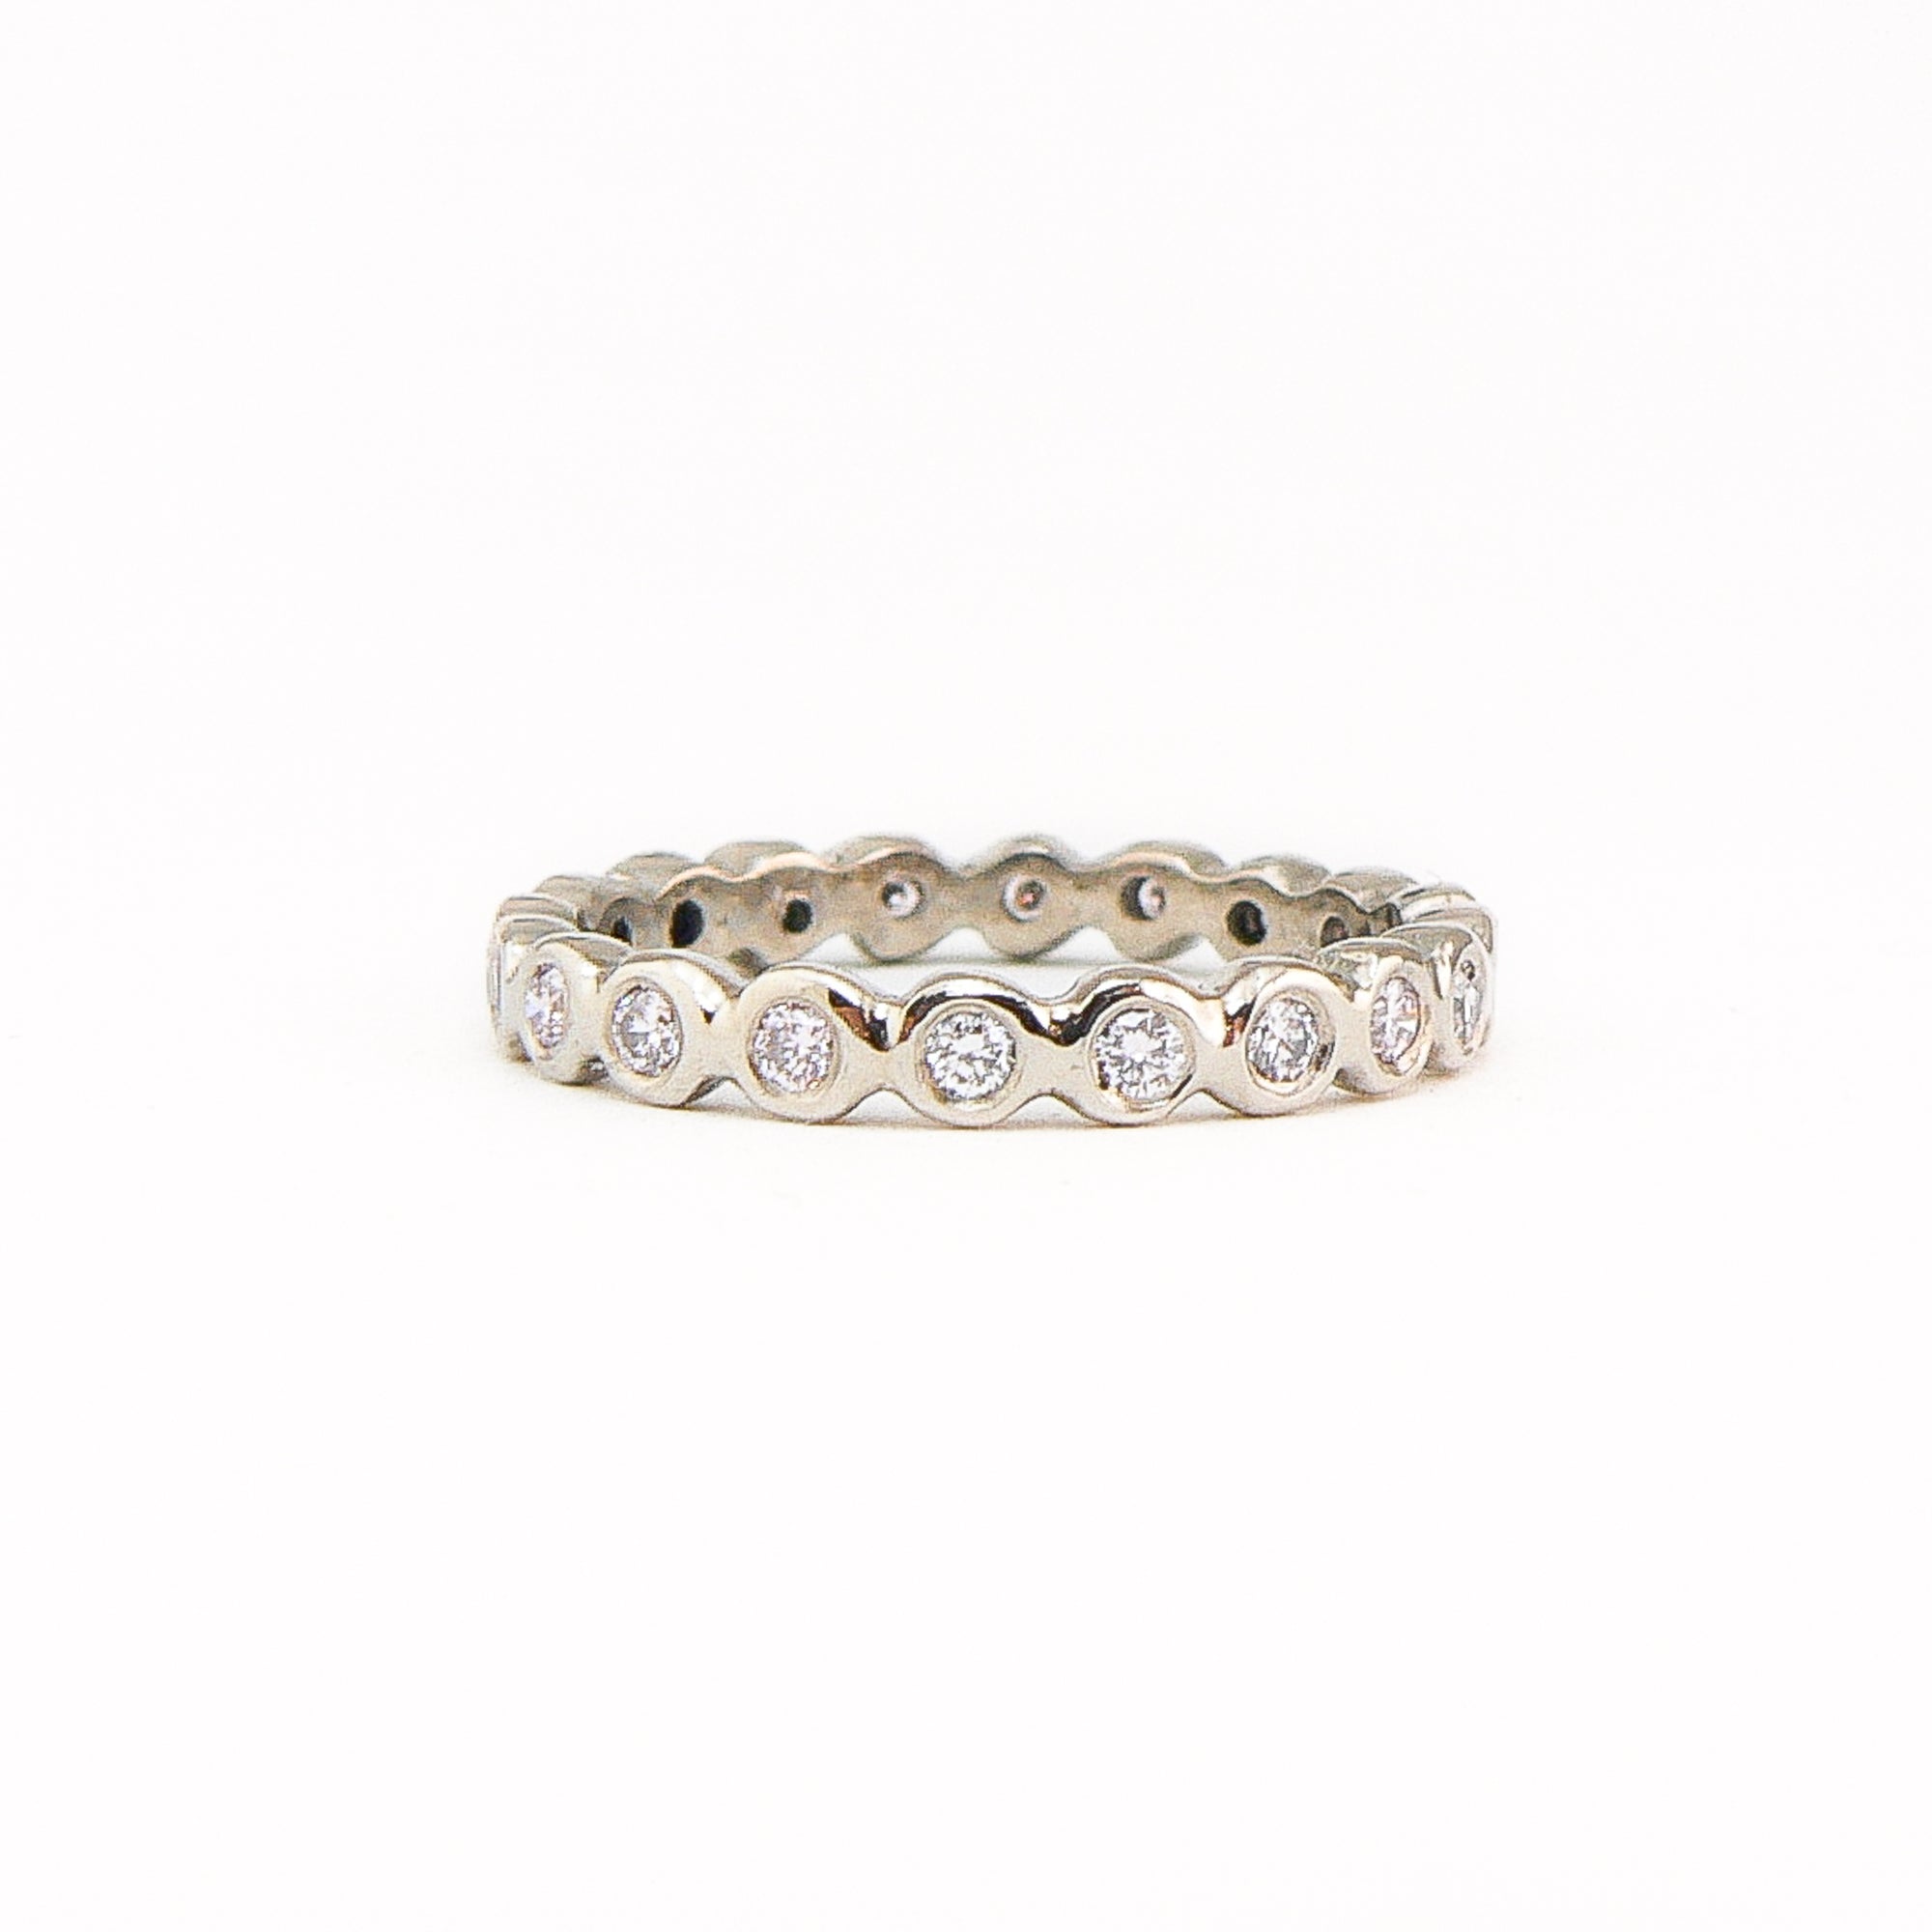 Bespoke 18 carat white gold eternity ring, set with 23 round brilliant cut white diamonds.